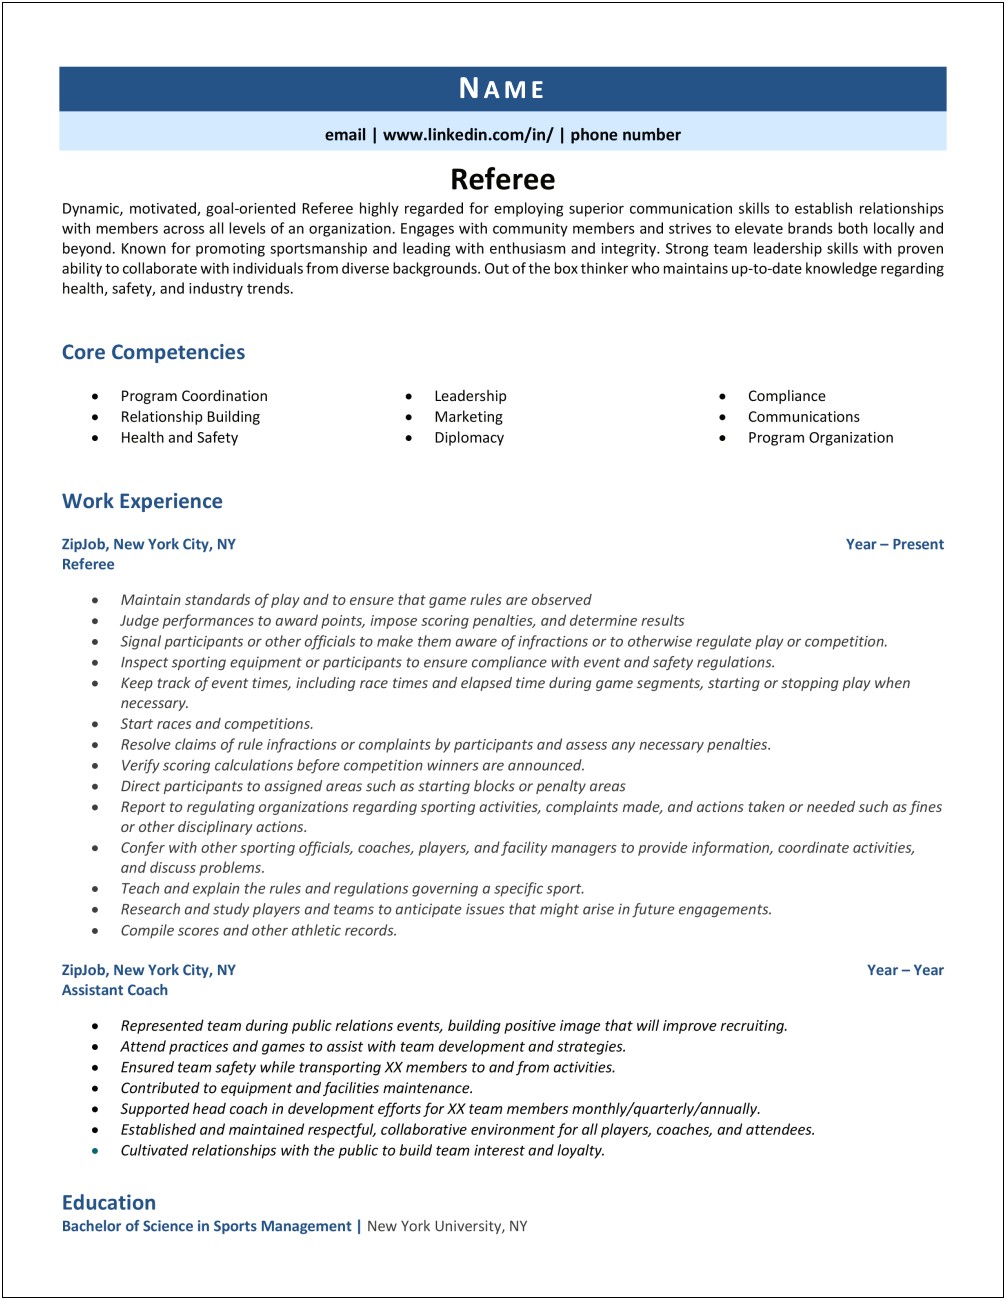 Sample Resume Job Description For Soccer Refere